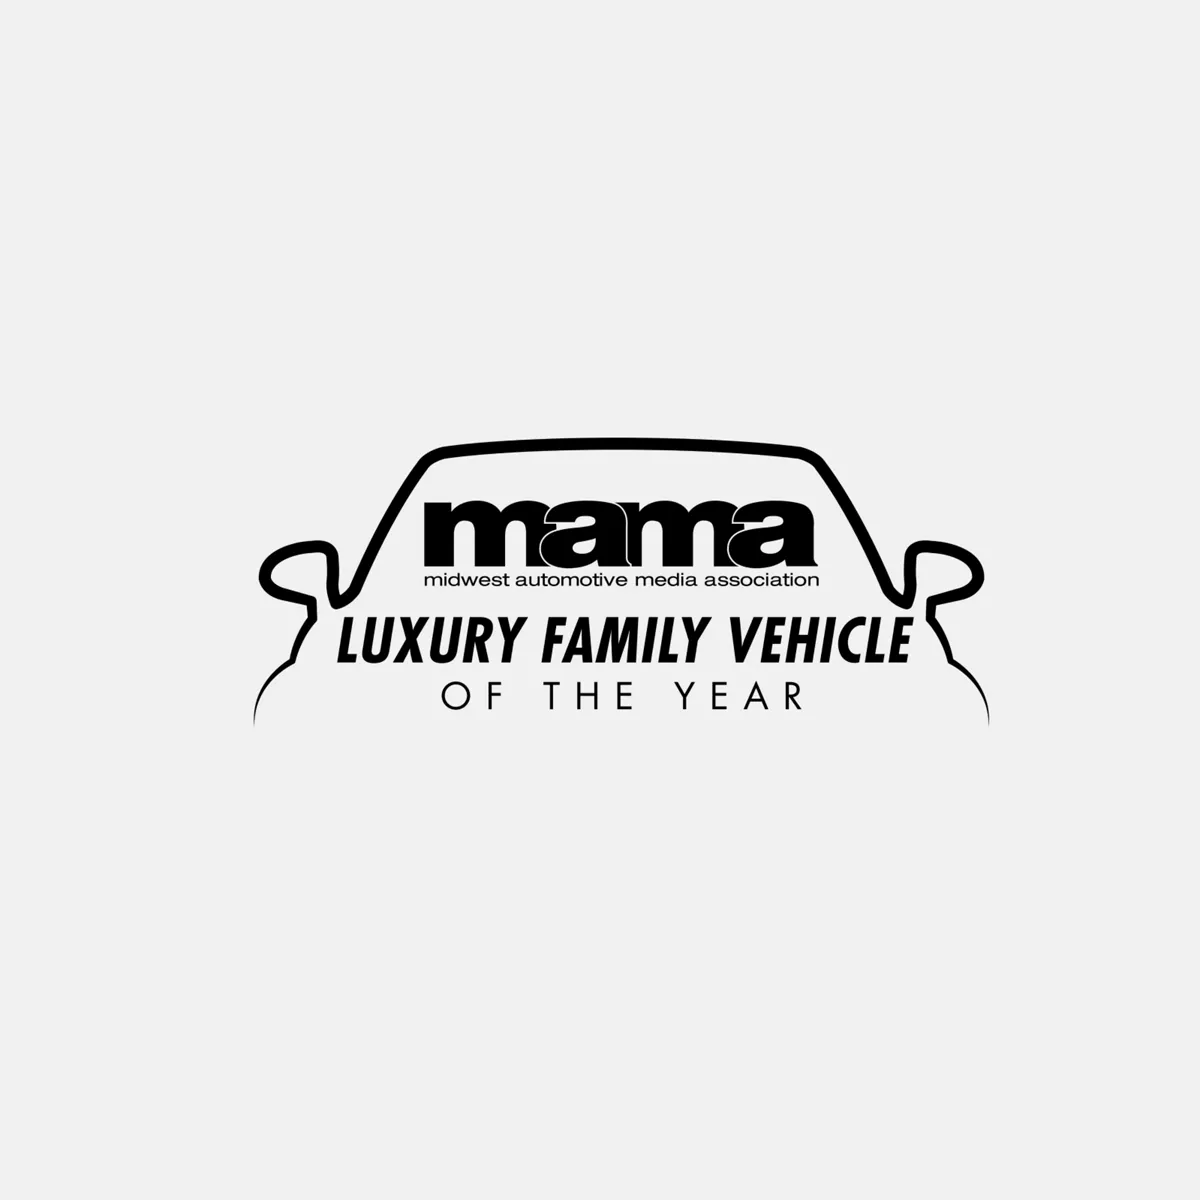 Mama Midwest automotive media association luxury family vehicle of the year.